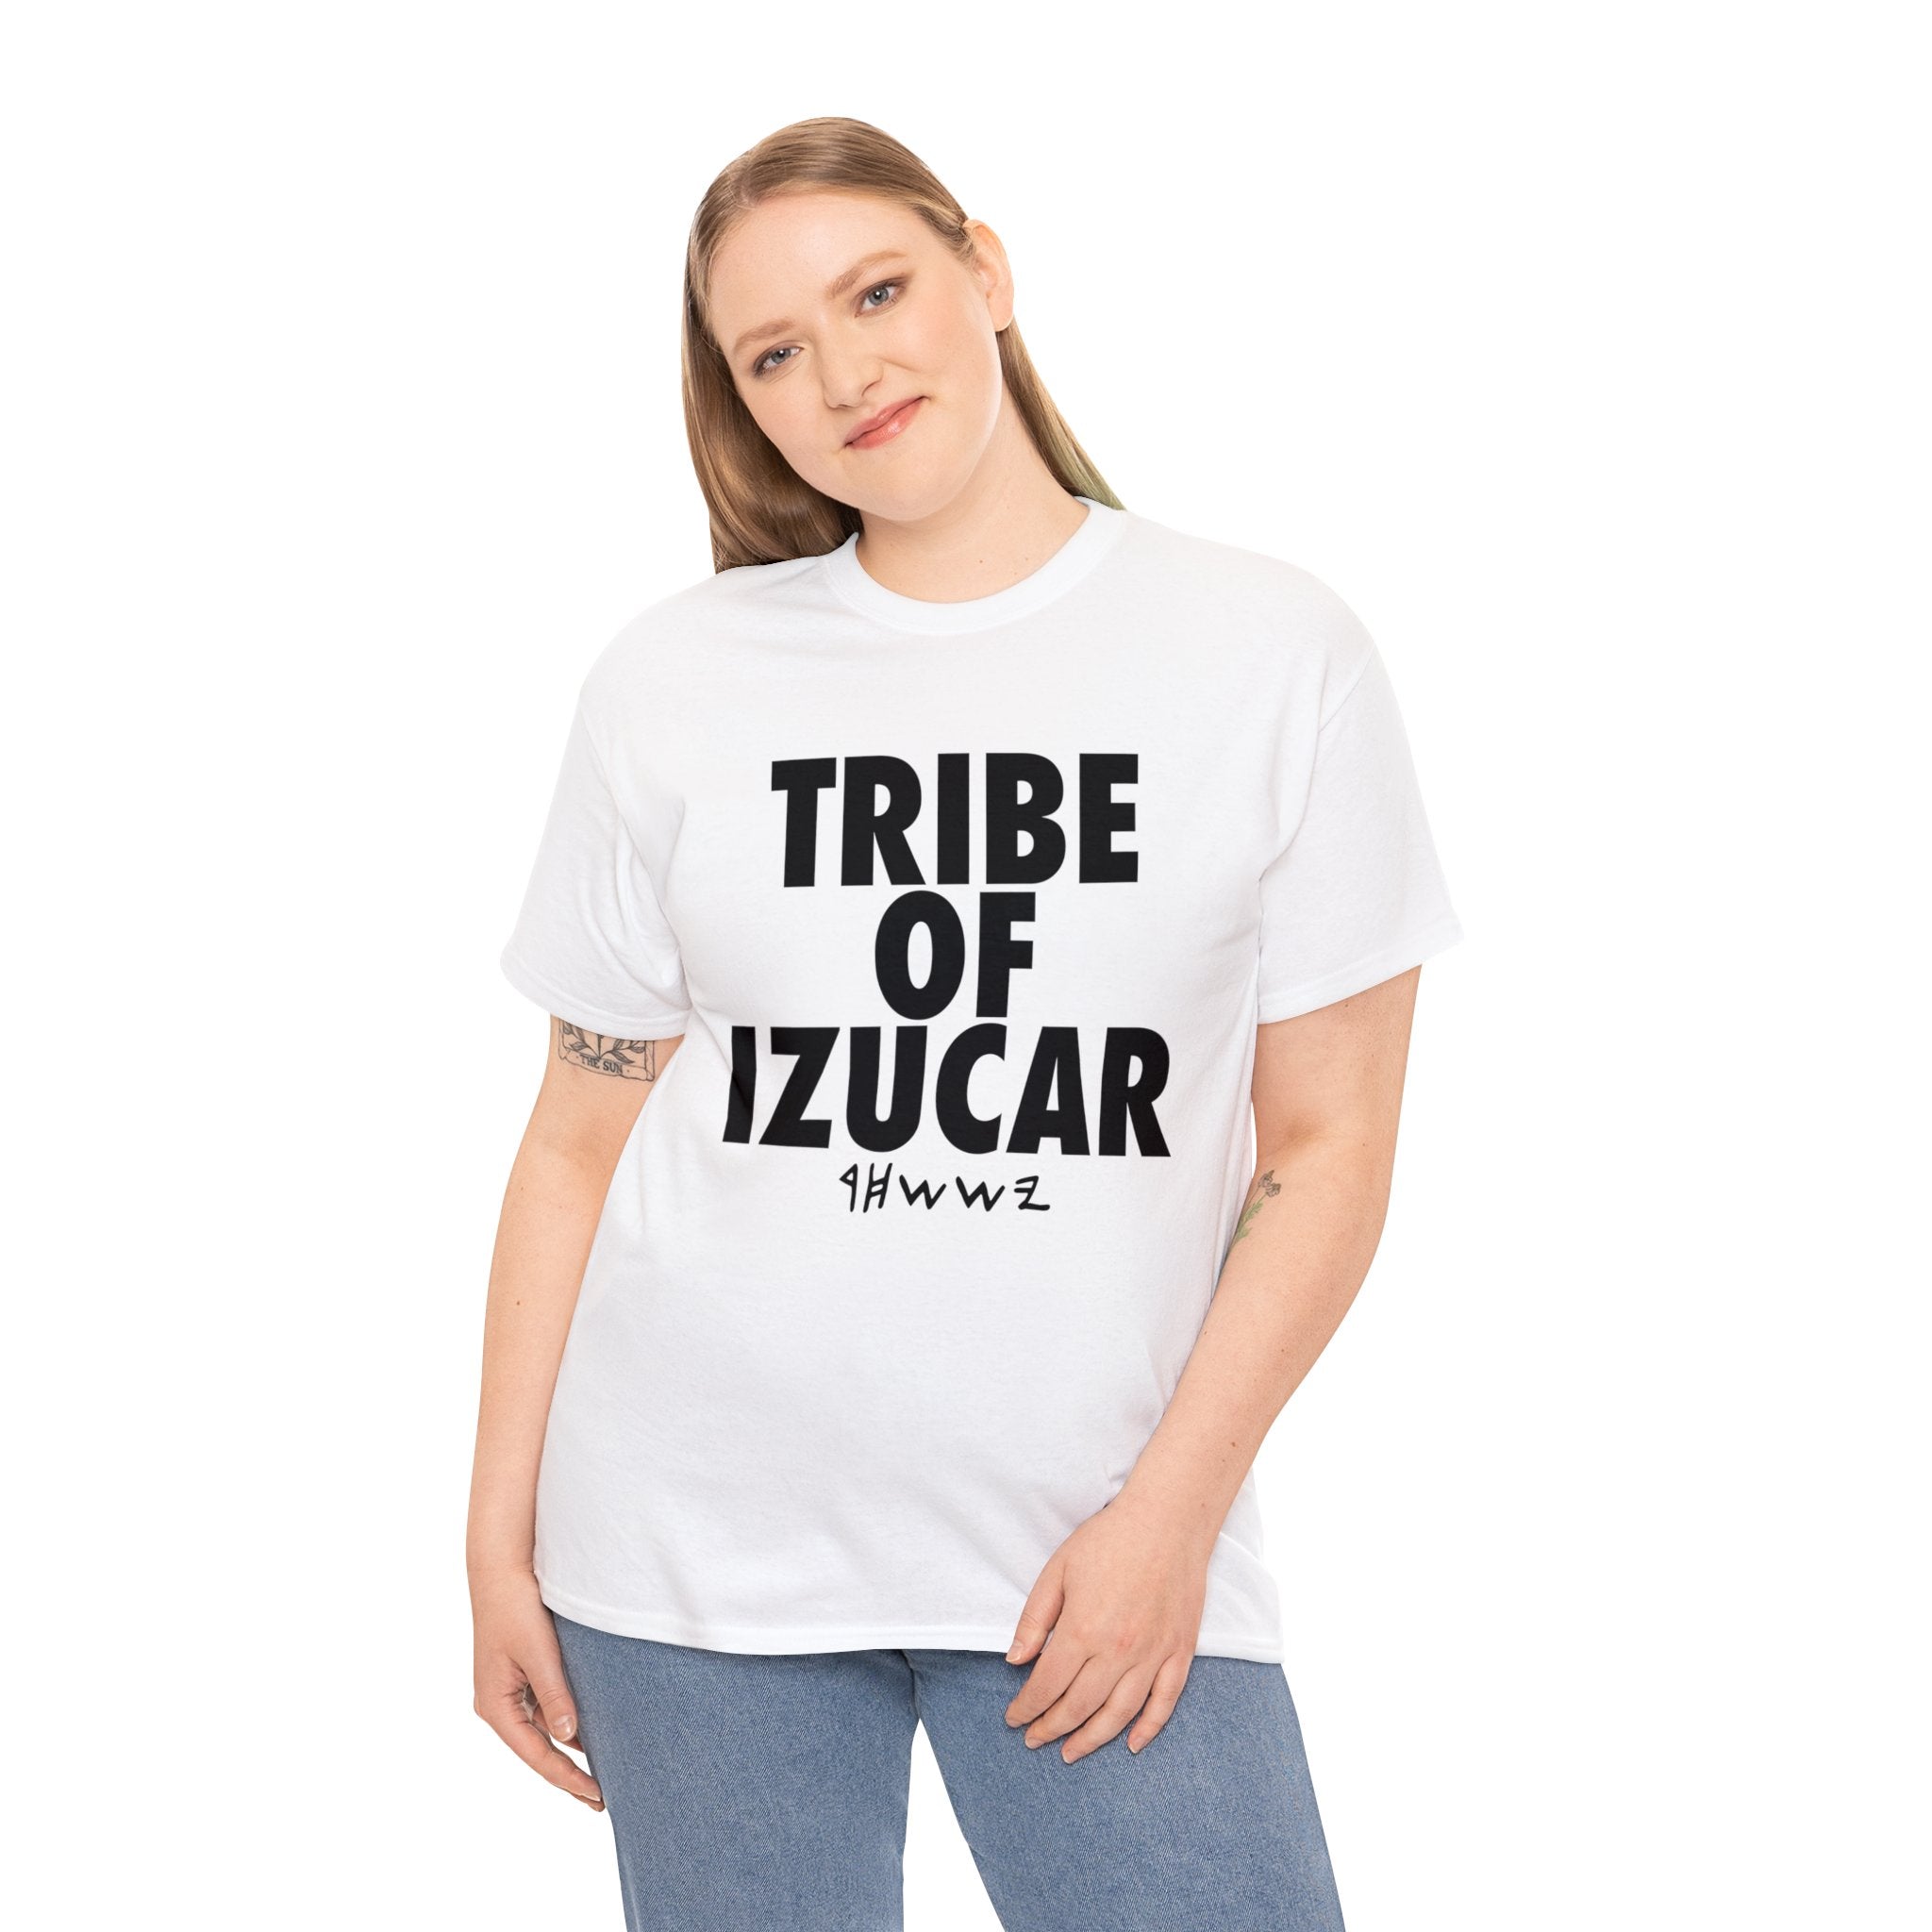 TRIBE OF IZUCAR(ISSACHAR) BLACK